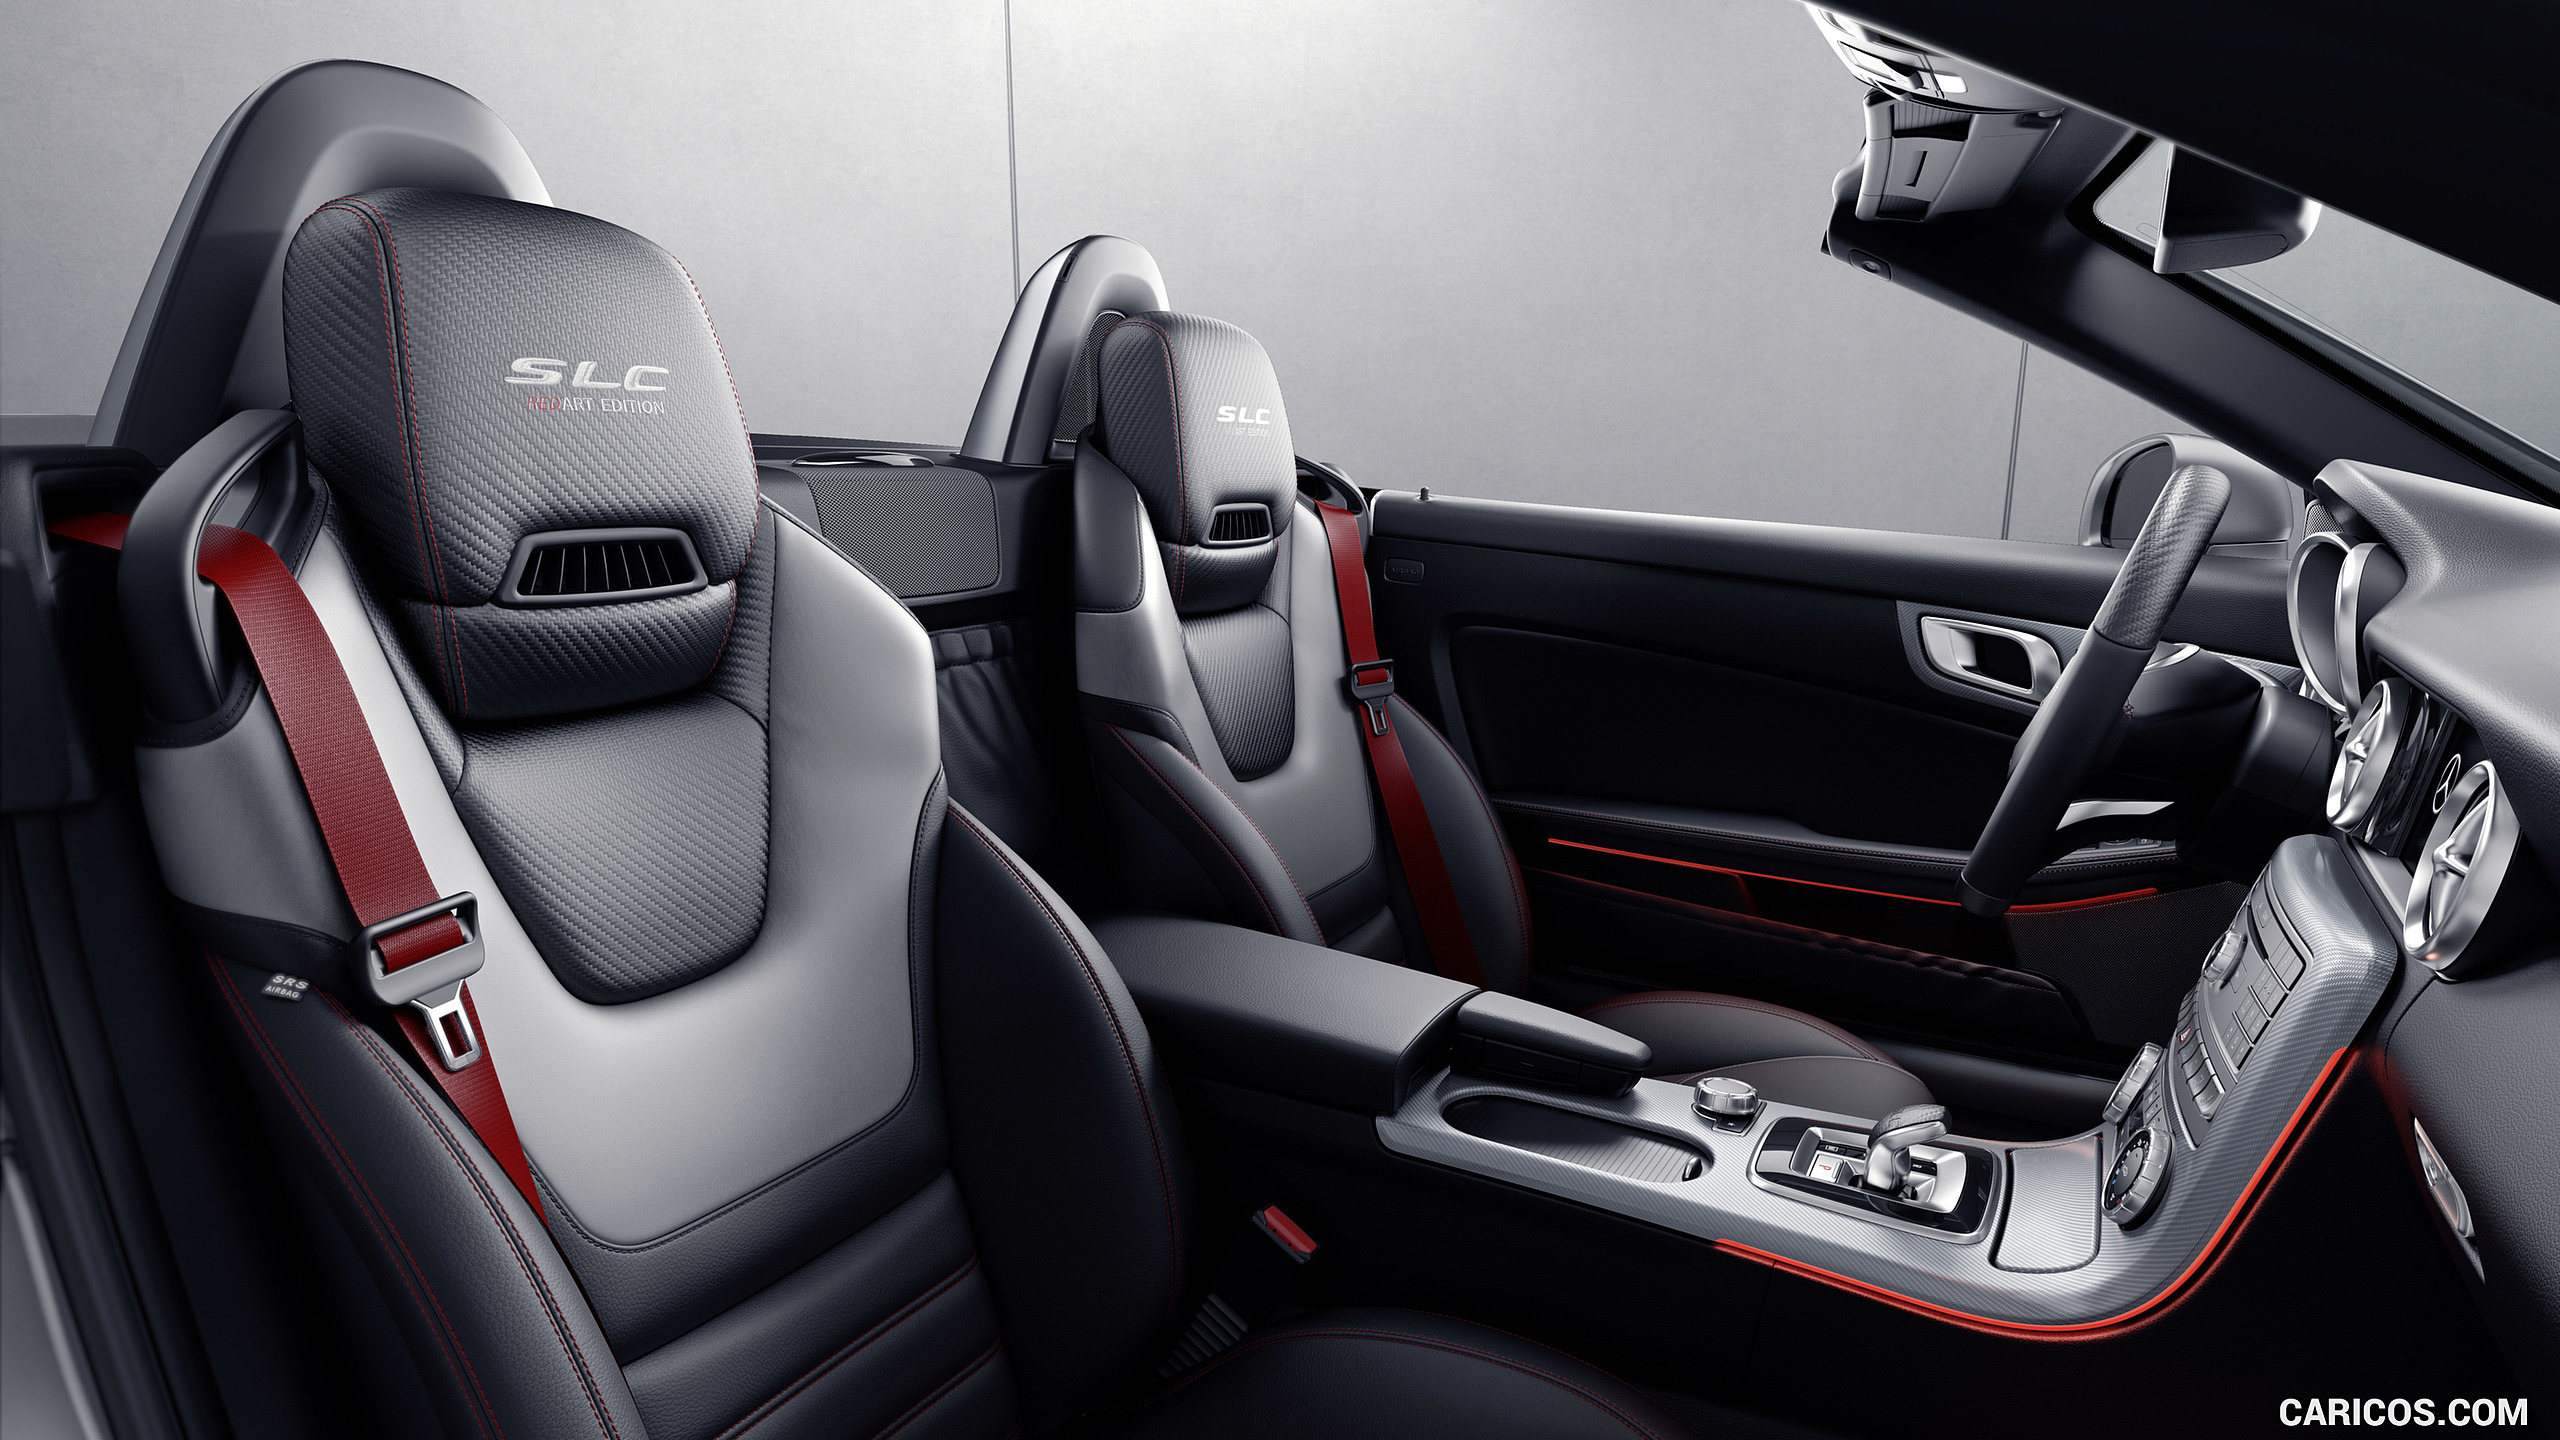 2017 Mercedes-AMG SLC 43 RedArt Edition - Interior, Seats, #5 of 13